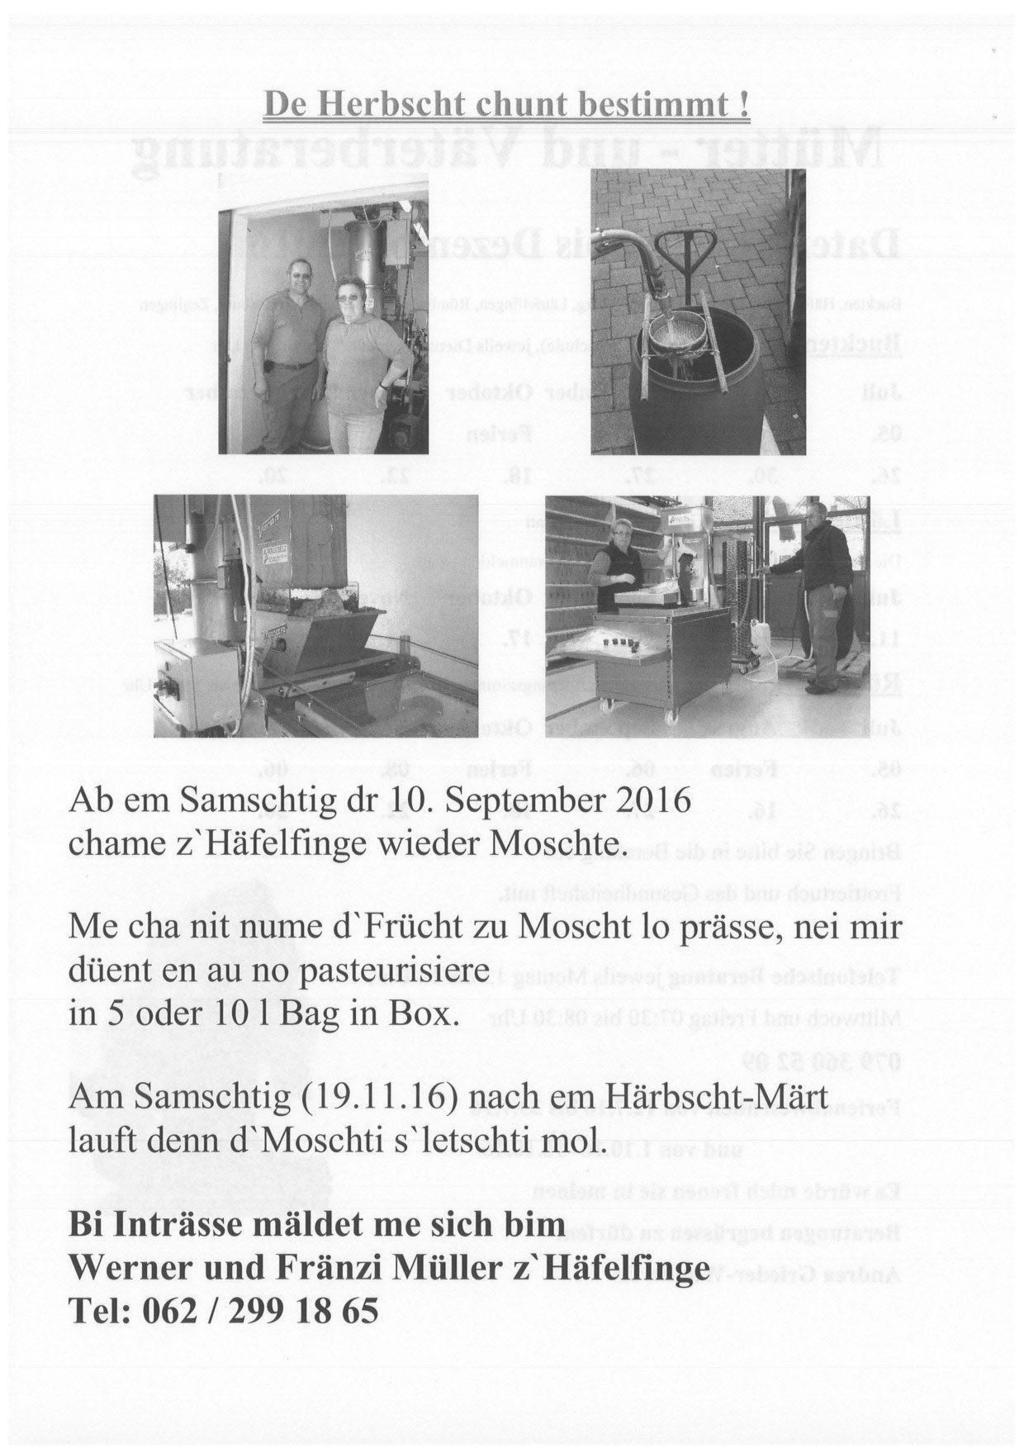 De Herbscht chunt bestimmt! Ab em Samschtig dr 10. September 2016 chame zhäfelfinge wieder Moschte.